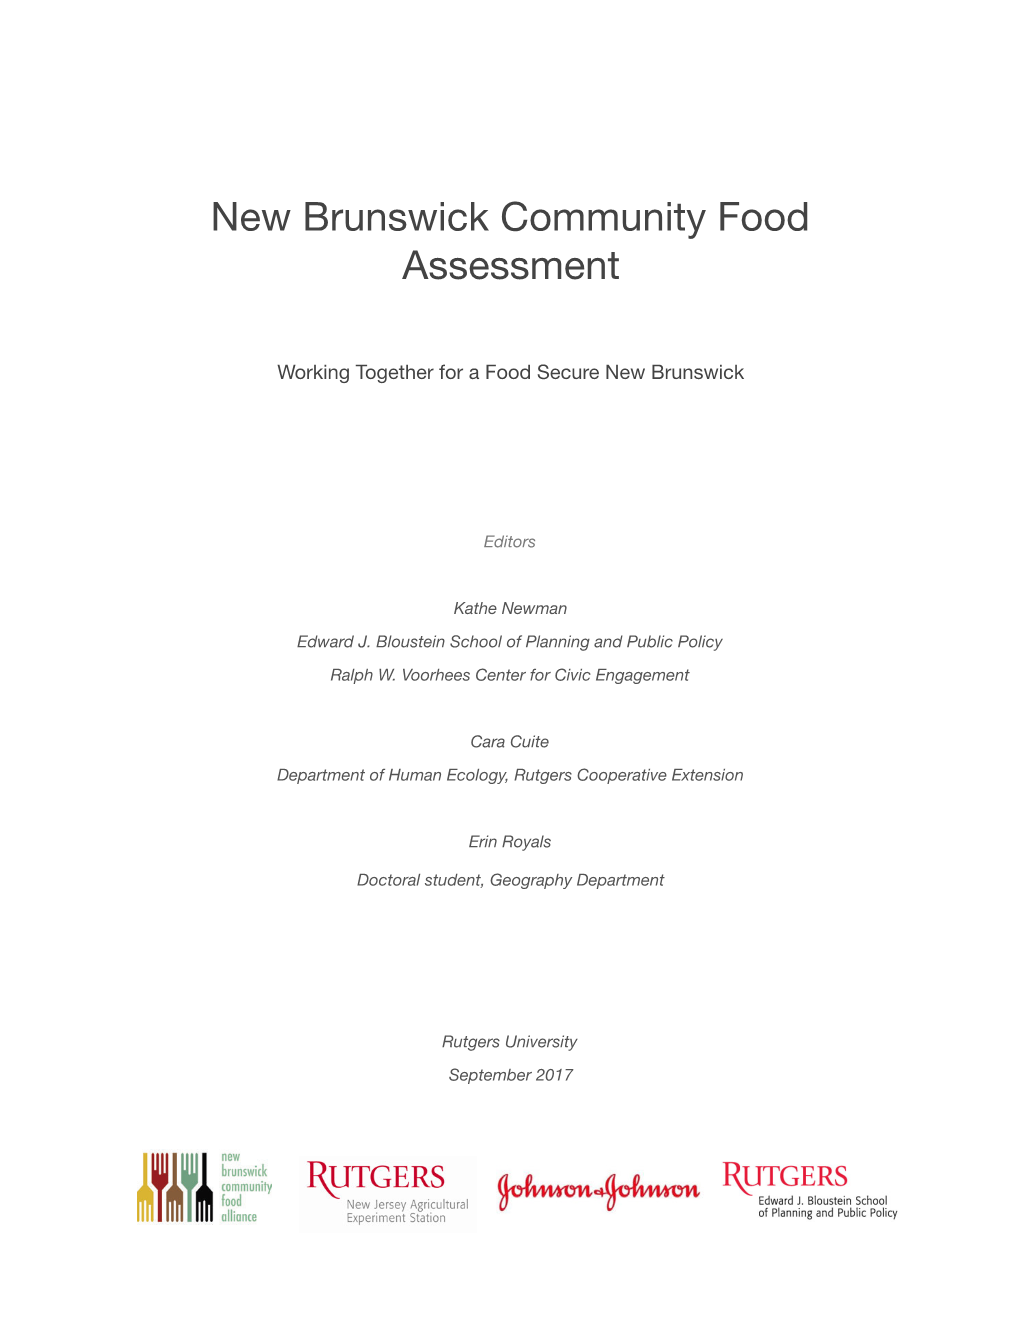 New Brunswick Community Food Assessment